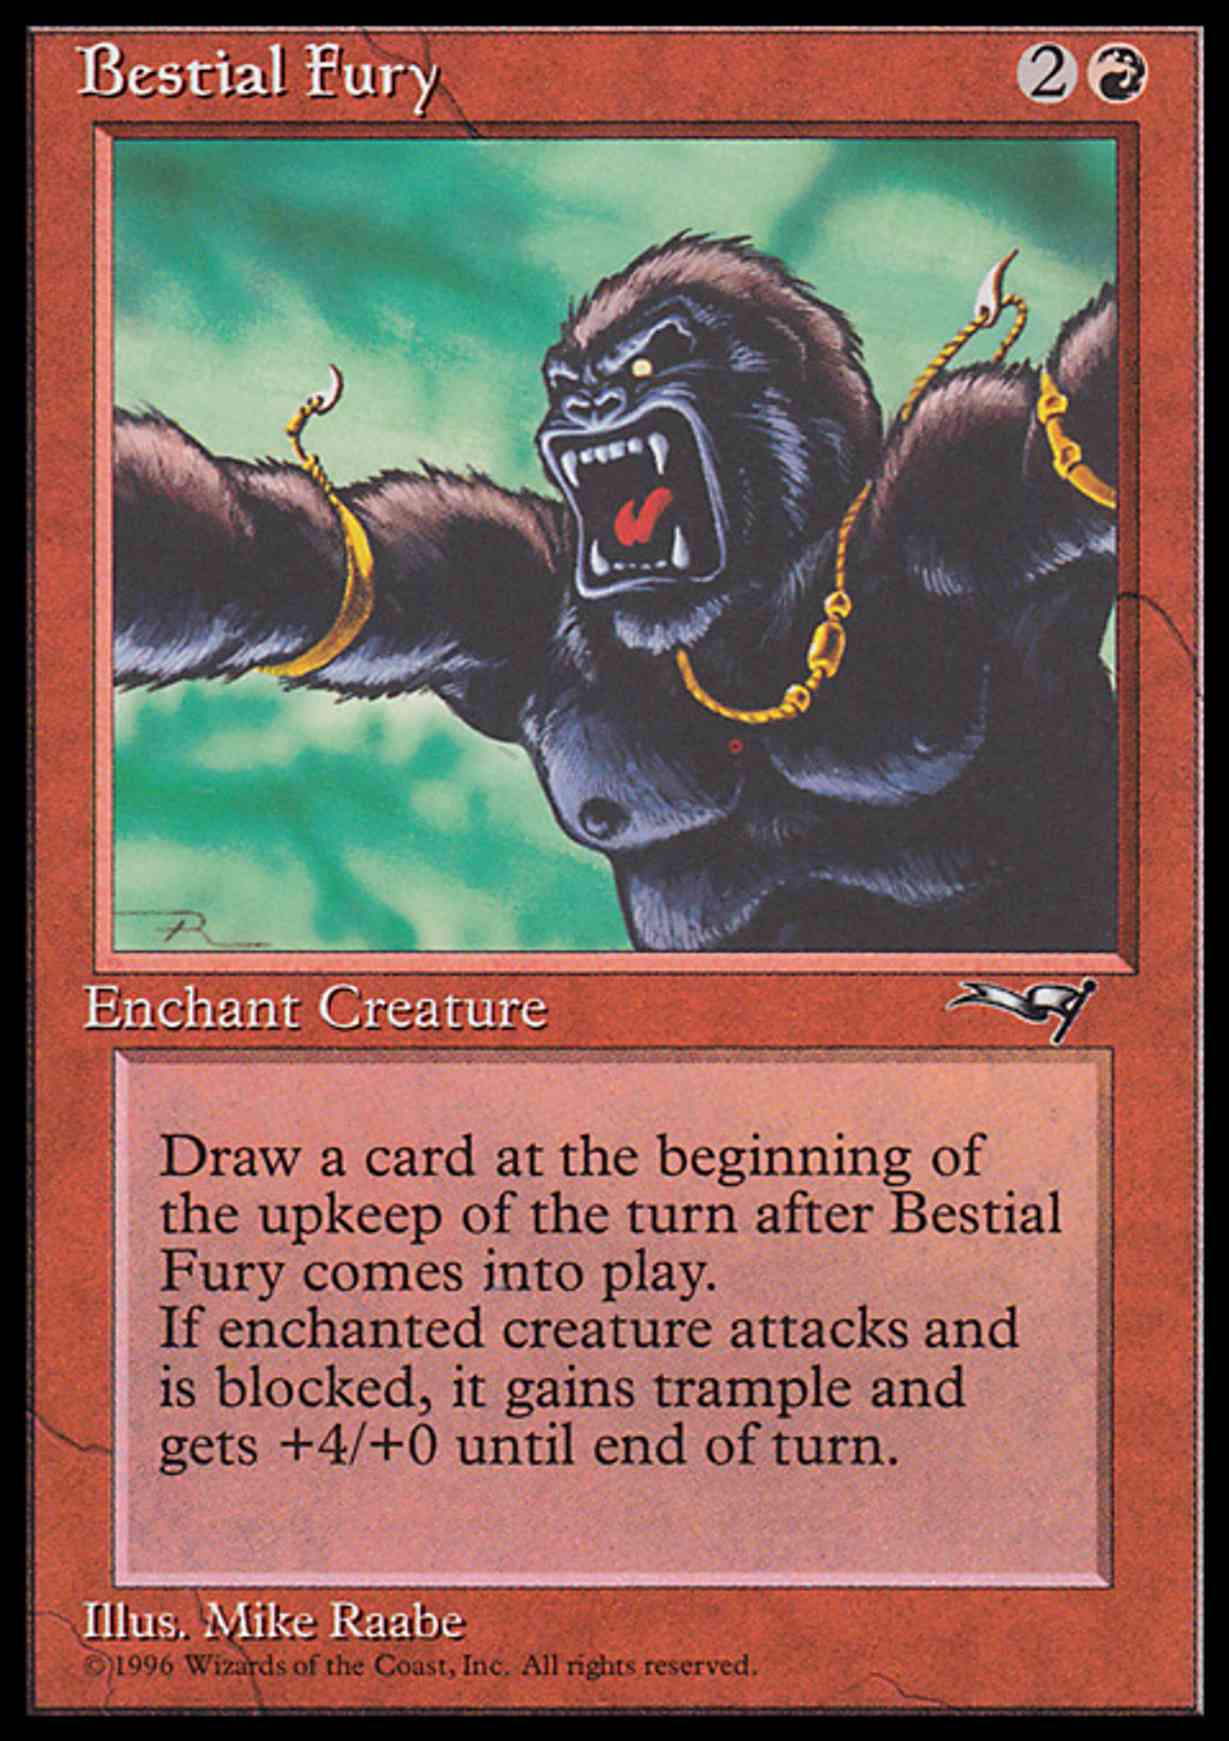 Bestial Fury (Facing Left) magic card front